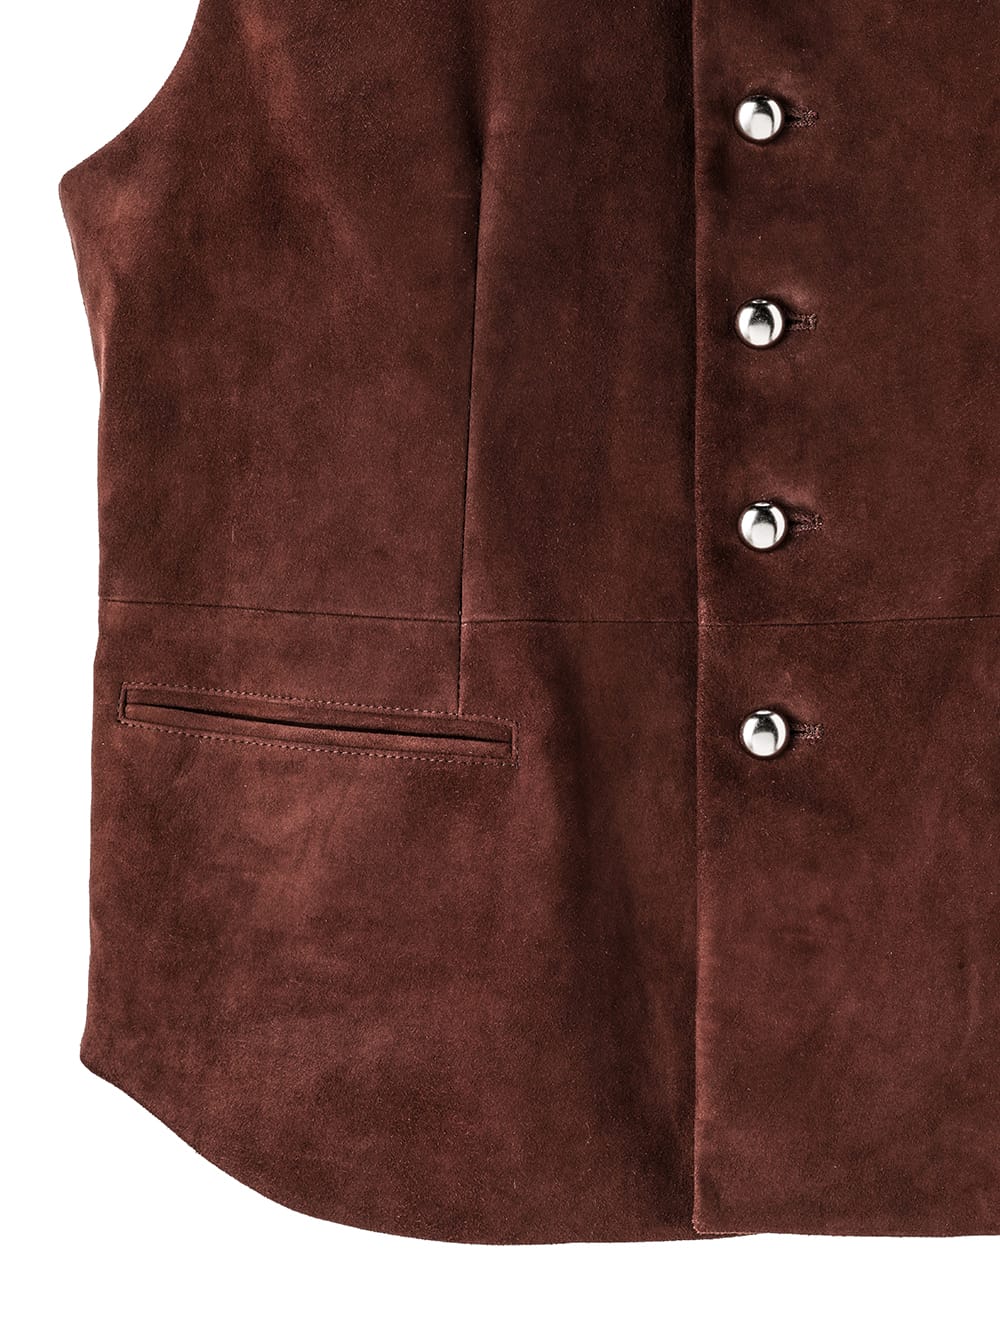 right - left sleeveless victorian jacket.